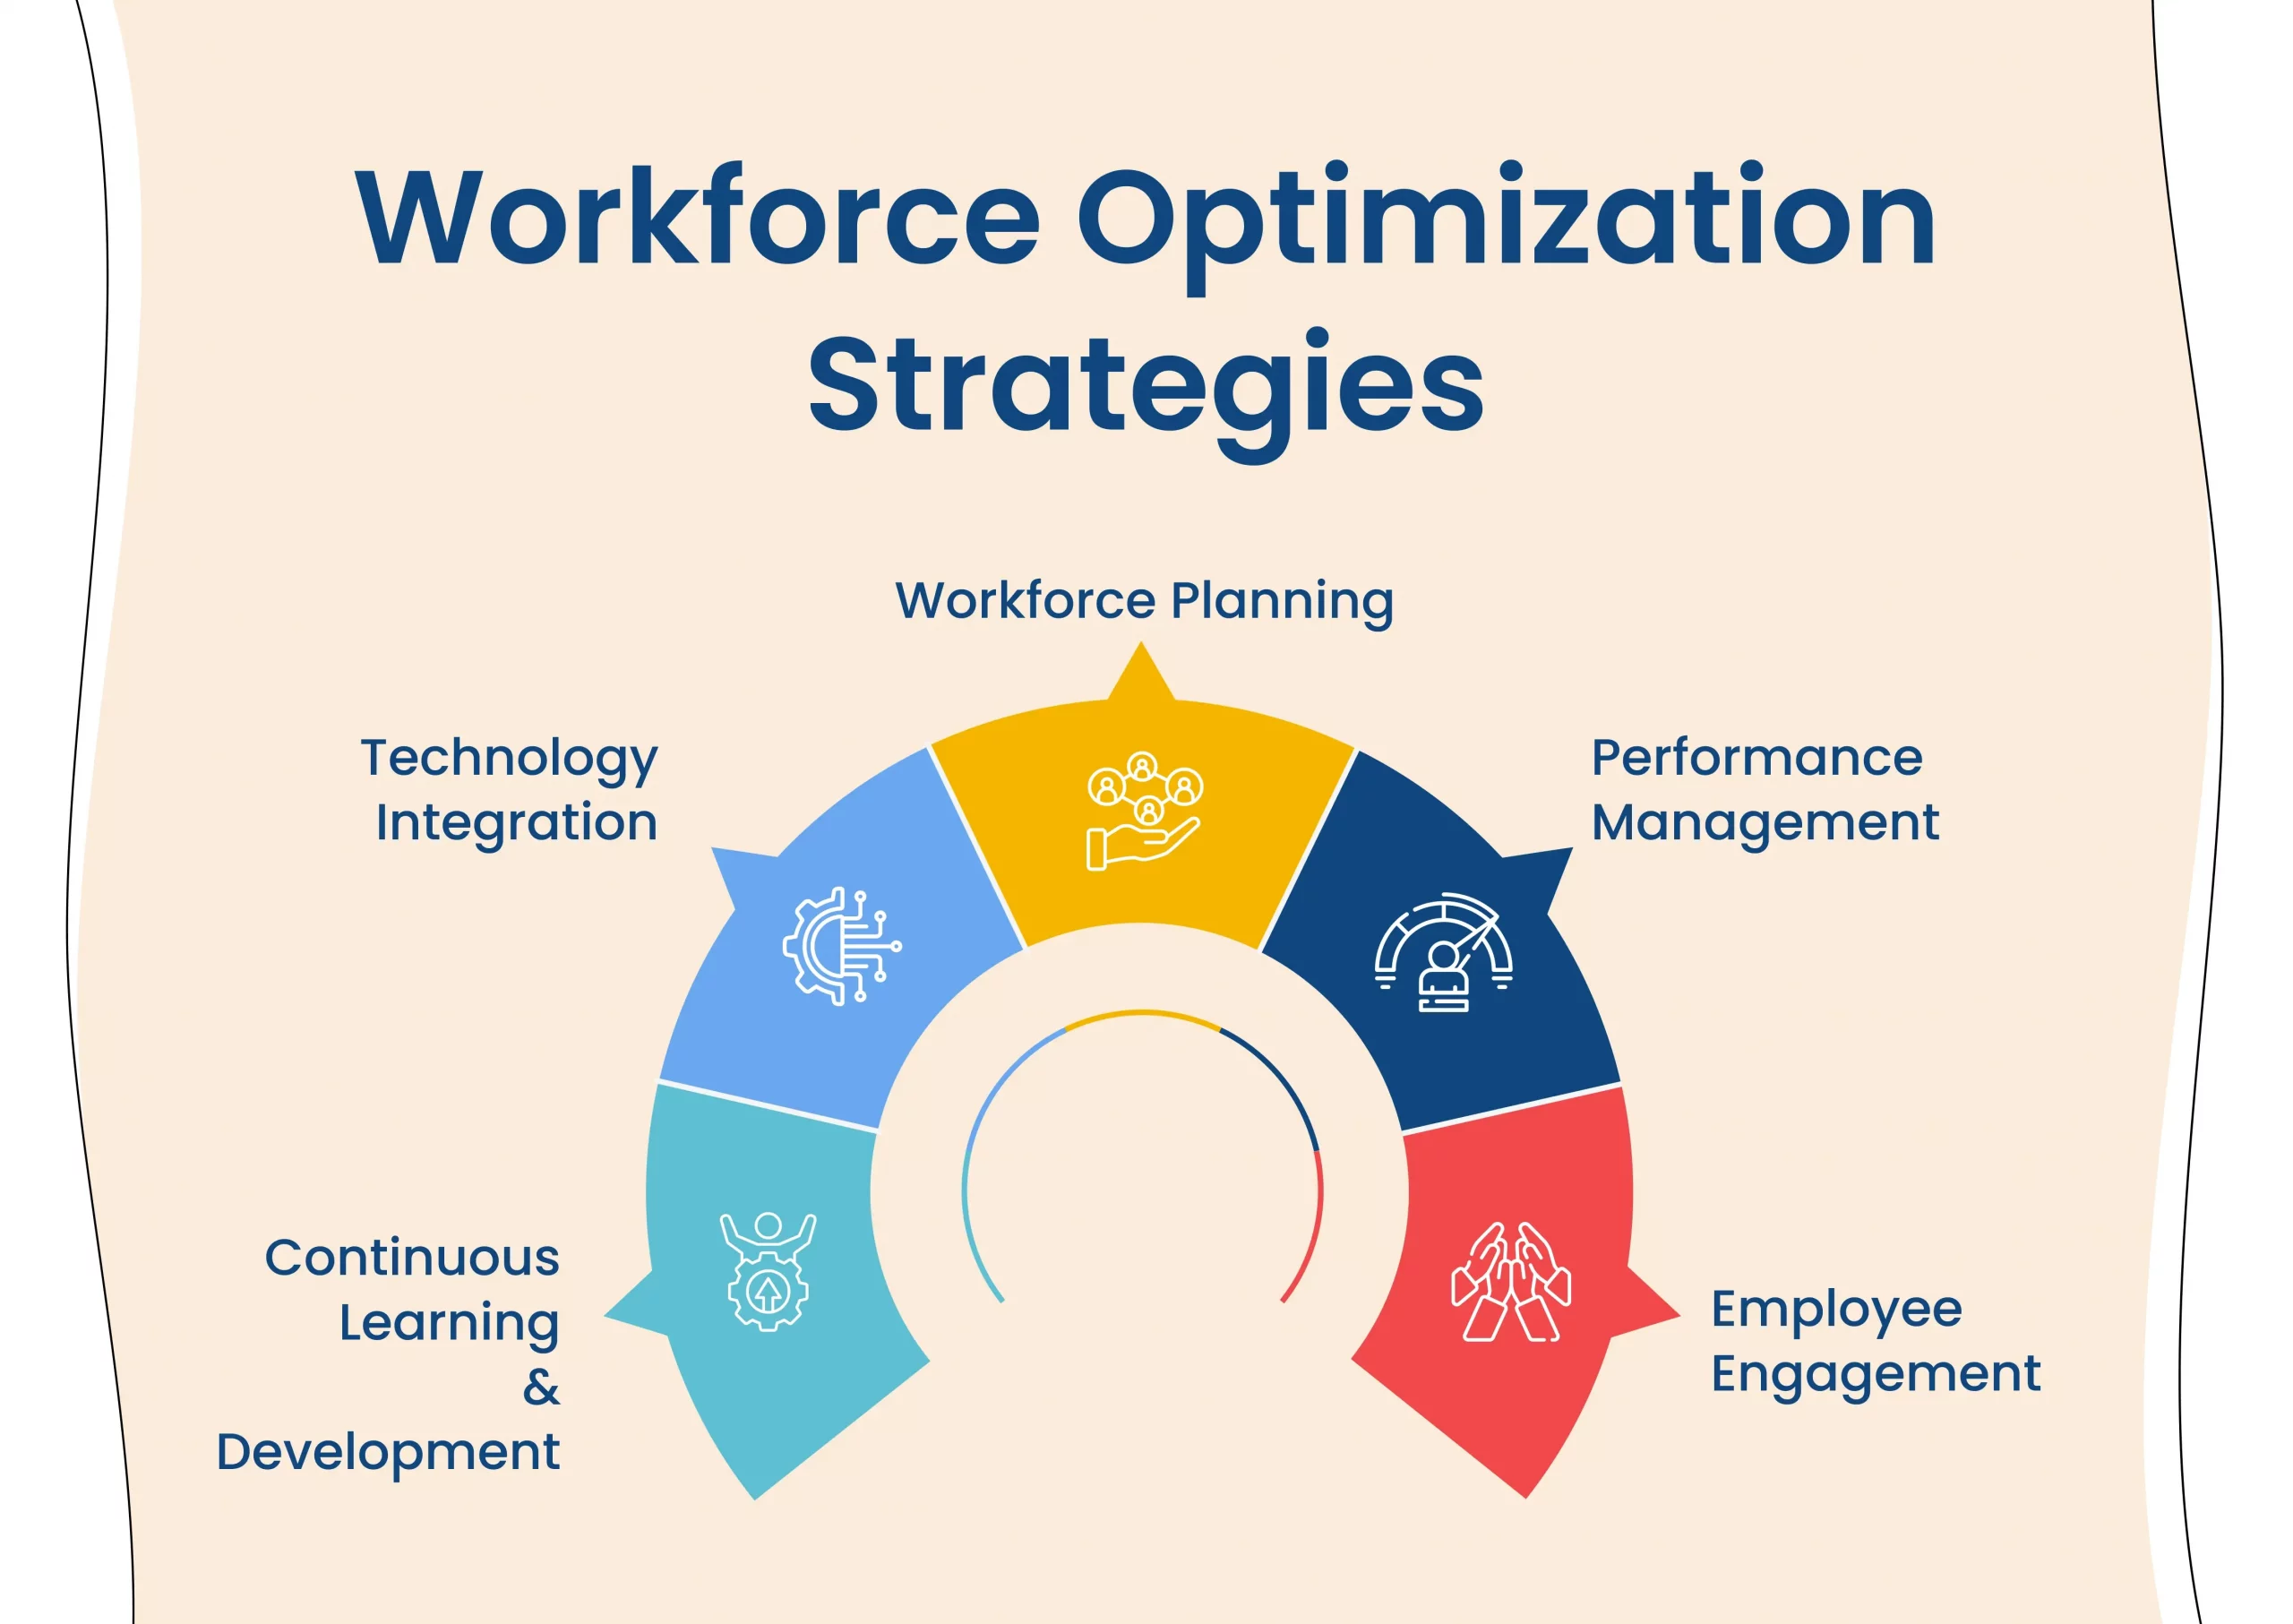 Workforce optimization strategies